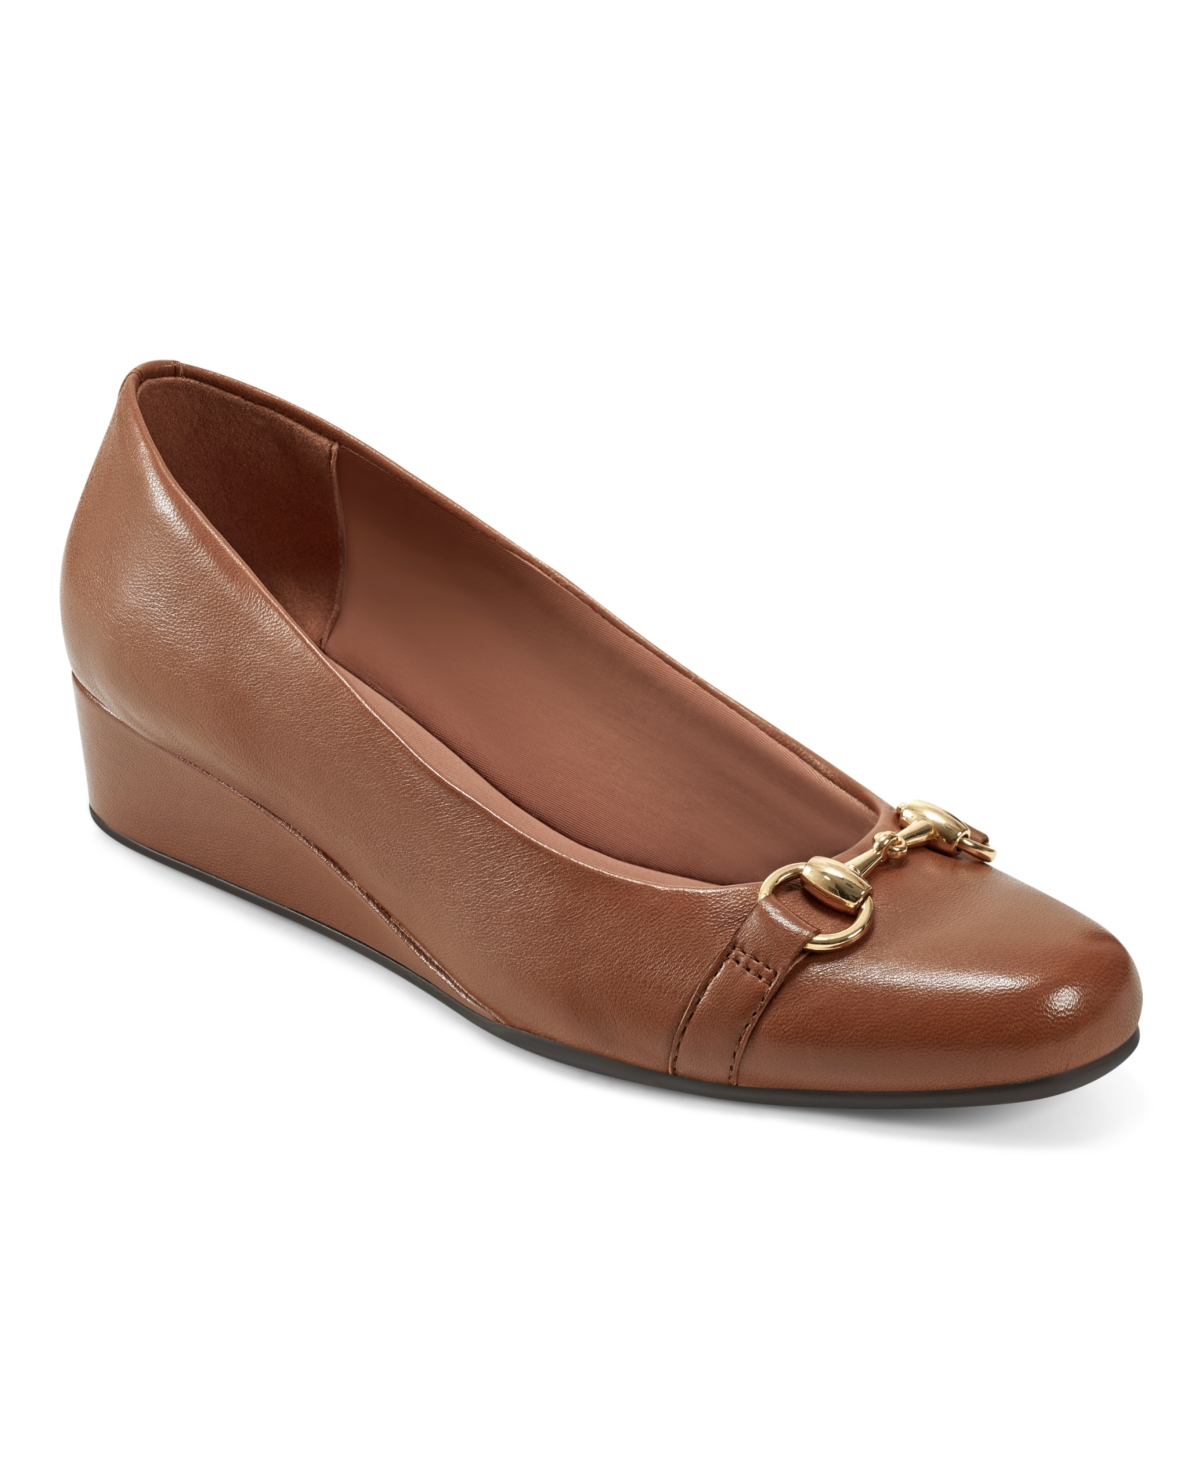 Women's Guliana Slip-On Closed Toe Dress Wedge Pumps - Medium Brown Leather